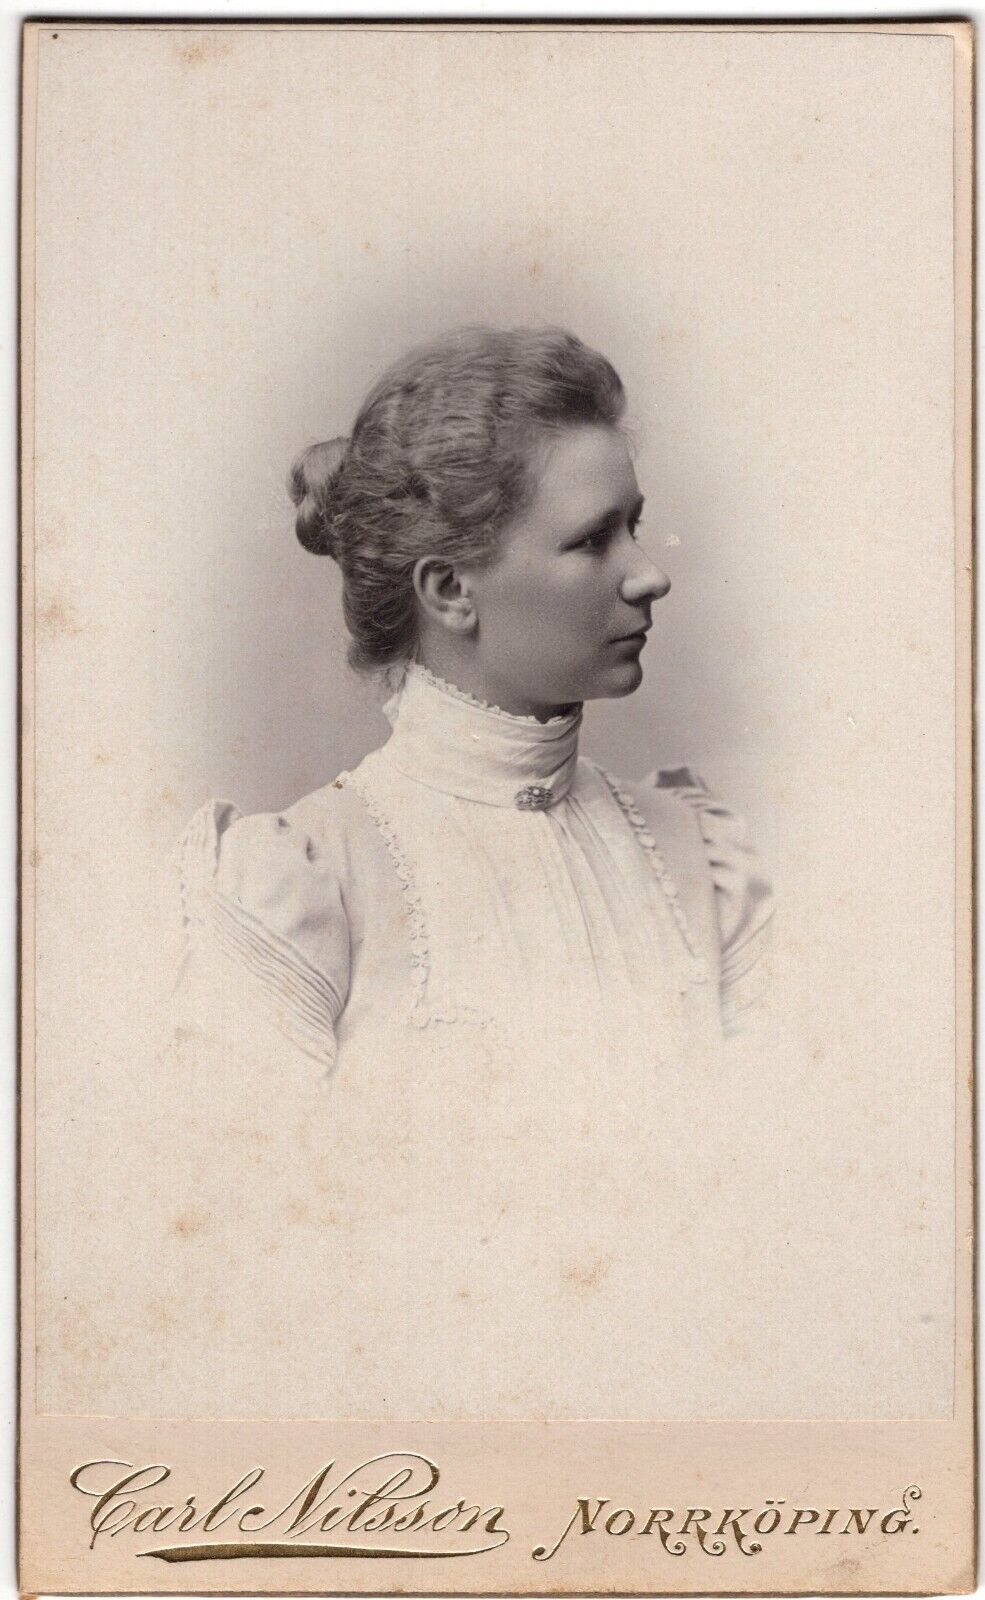 CIRCA 1890s CDV CARL NILSSON LADY IN FANCY WHITE DRESS NORRKOPING SWEDEN